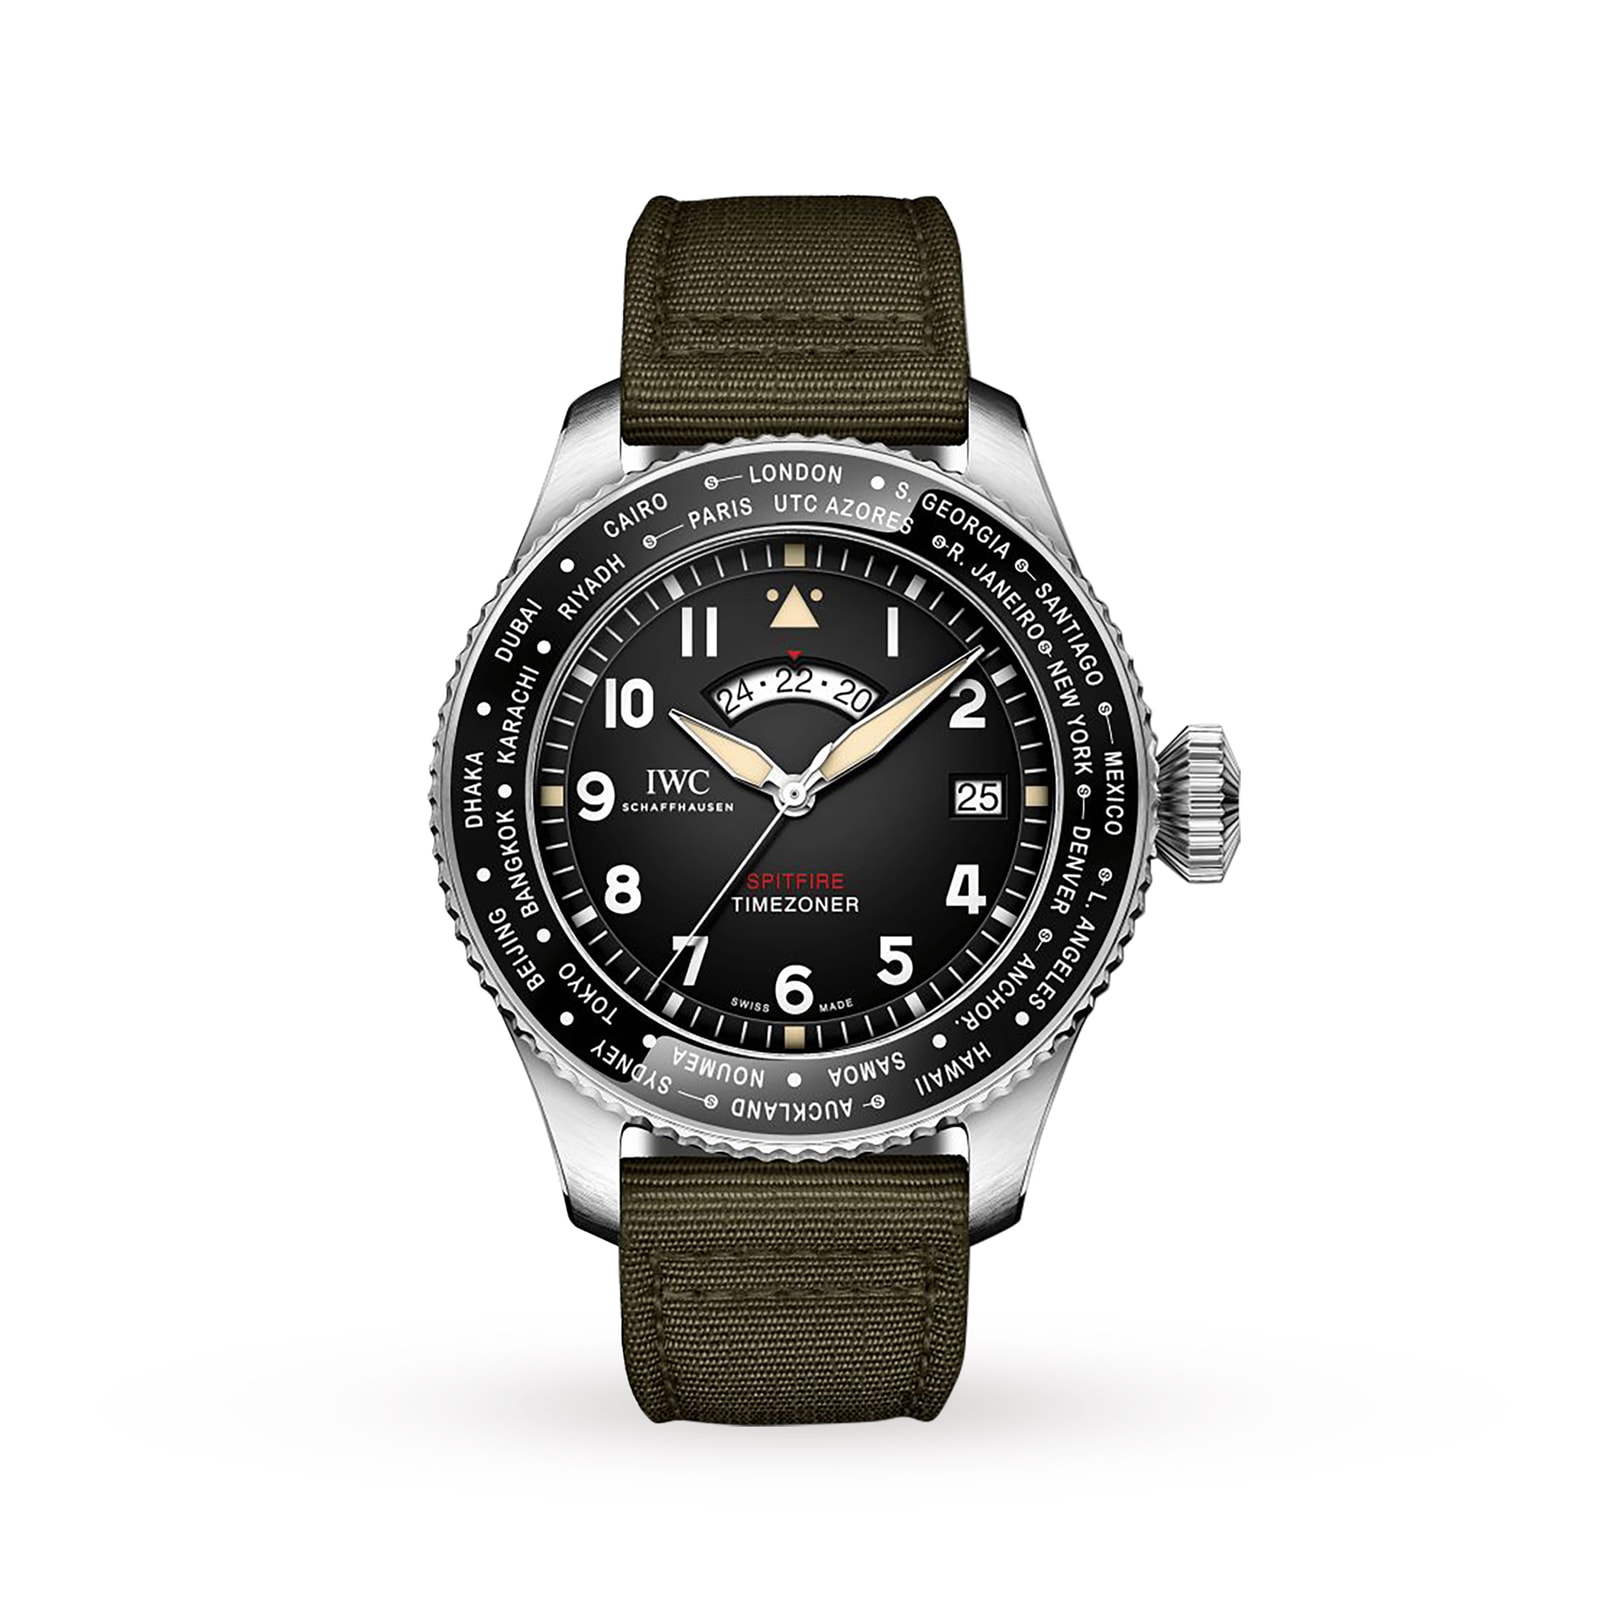 Citizen Promaster Skyhawk AT Titanium] New NATO strap for my flight watch!  : r/Watches